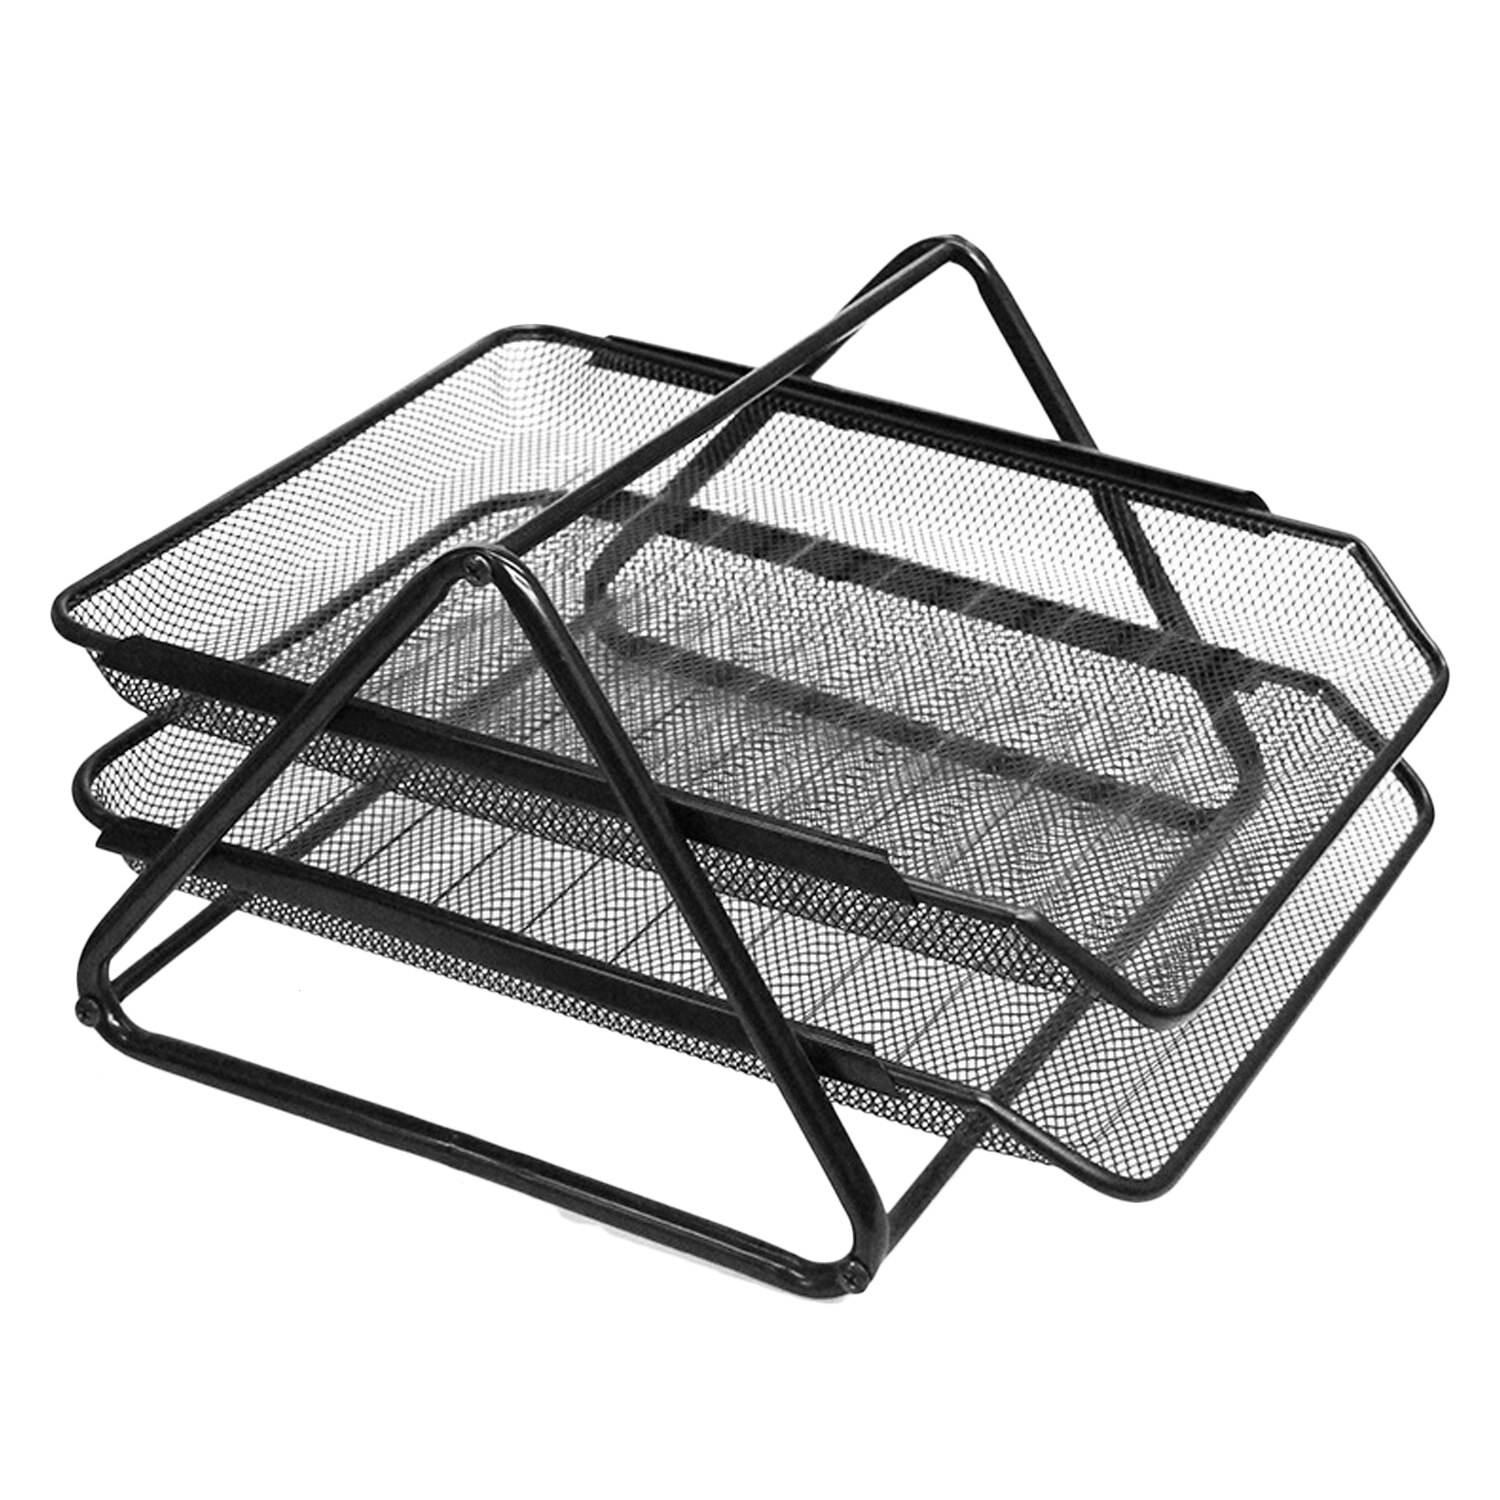 2-- lags stabelbar metal mesh filholder stativbakke til magasin brevpapir dokument hjemmekontor skrivebord sort